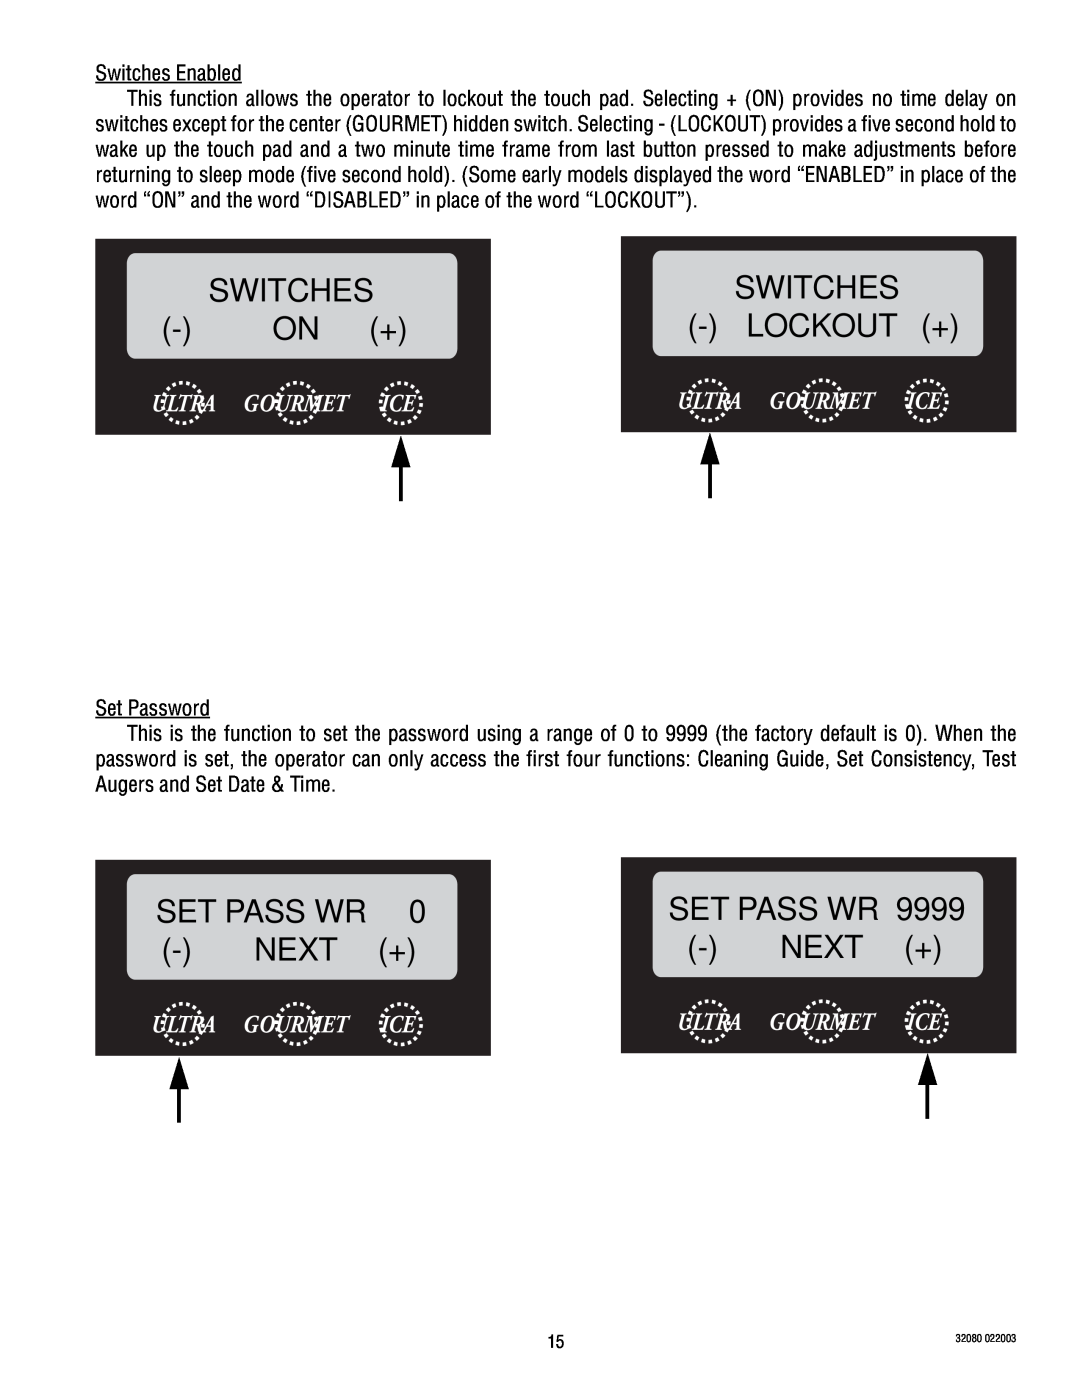 Bunn ULTRA-2 manual Switches, On +, Lockout +, Set Pass Wr, Next + 